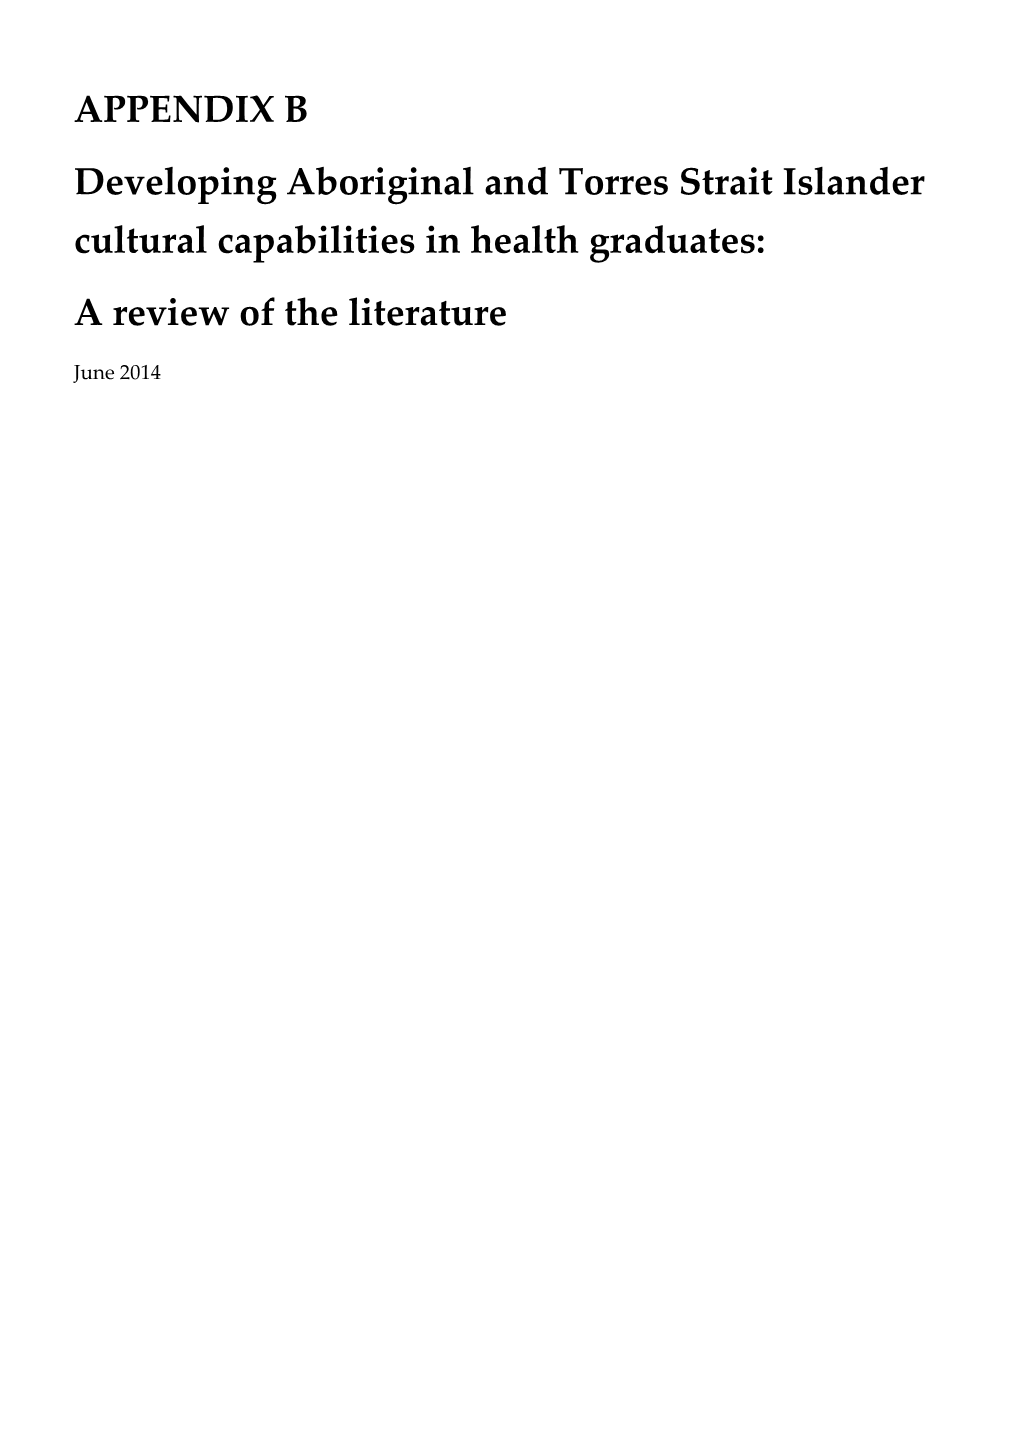 Developing Aboriginal and Torres Strait Islander Cultural Capabilities in Health Graduates